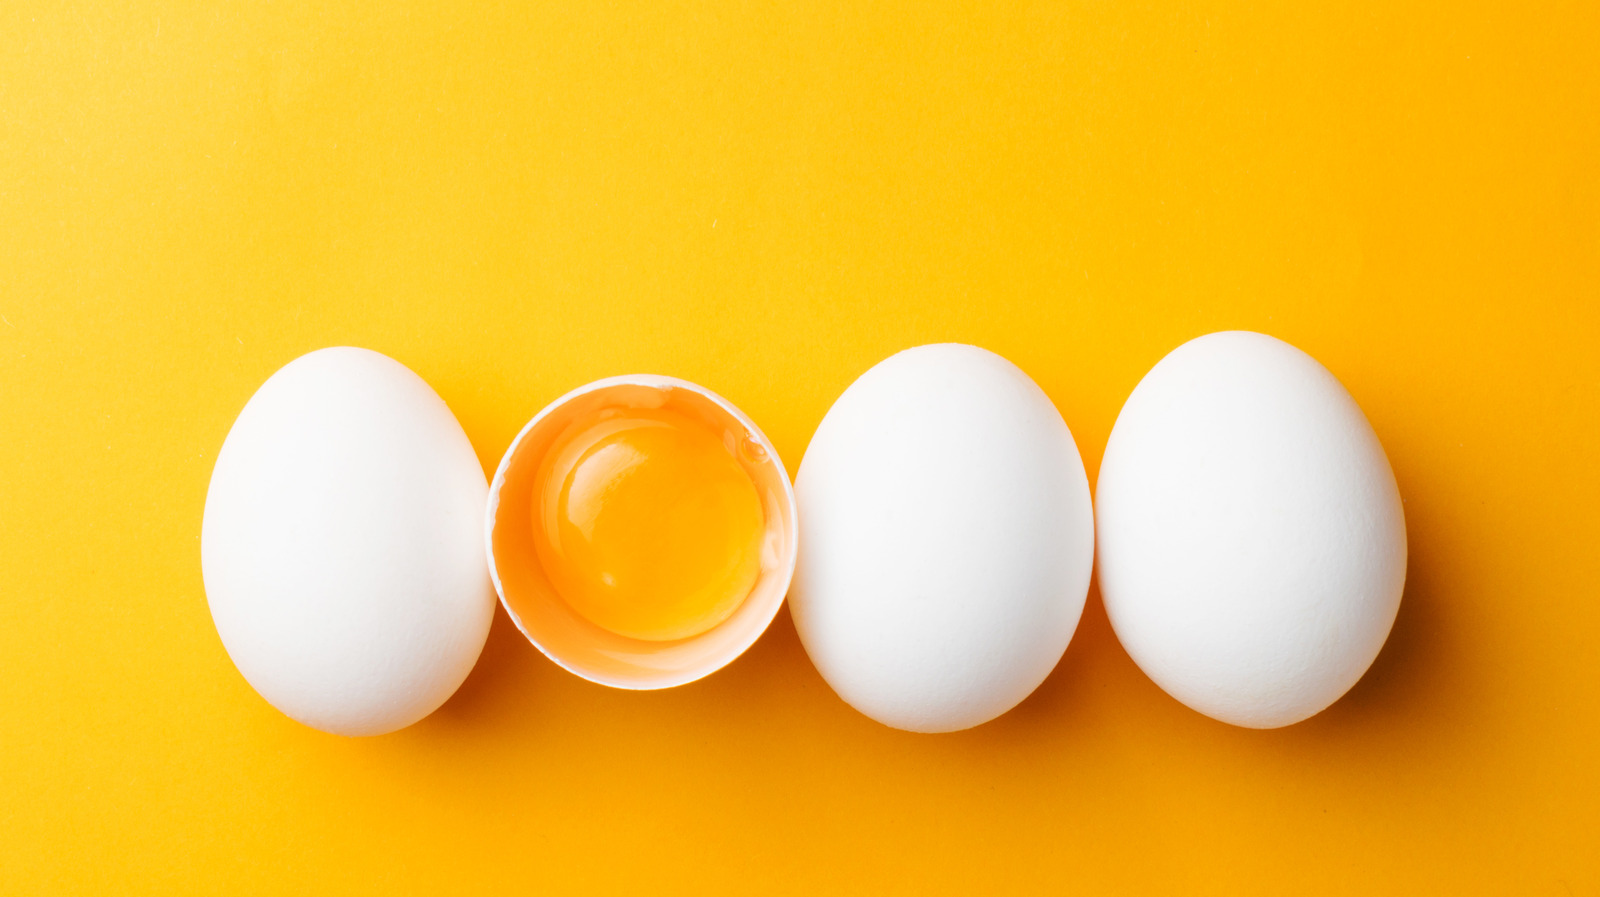 How to Fry an Egg (4 Ways!) - Jessica Gavin